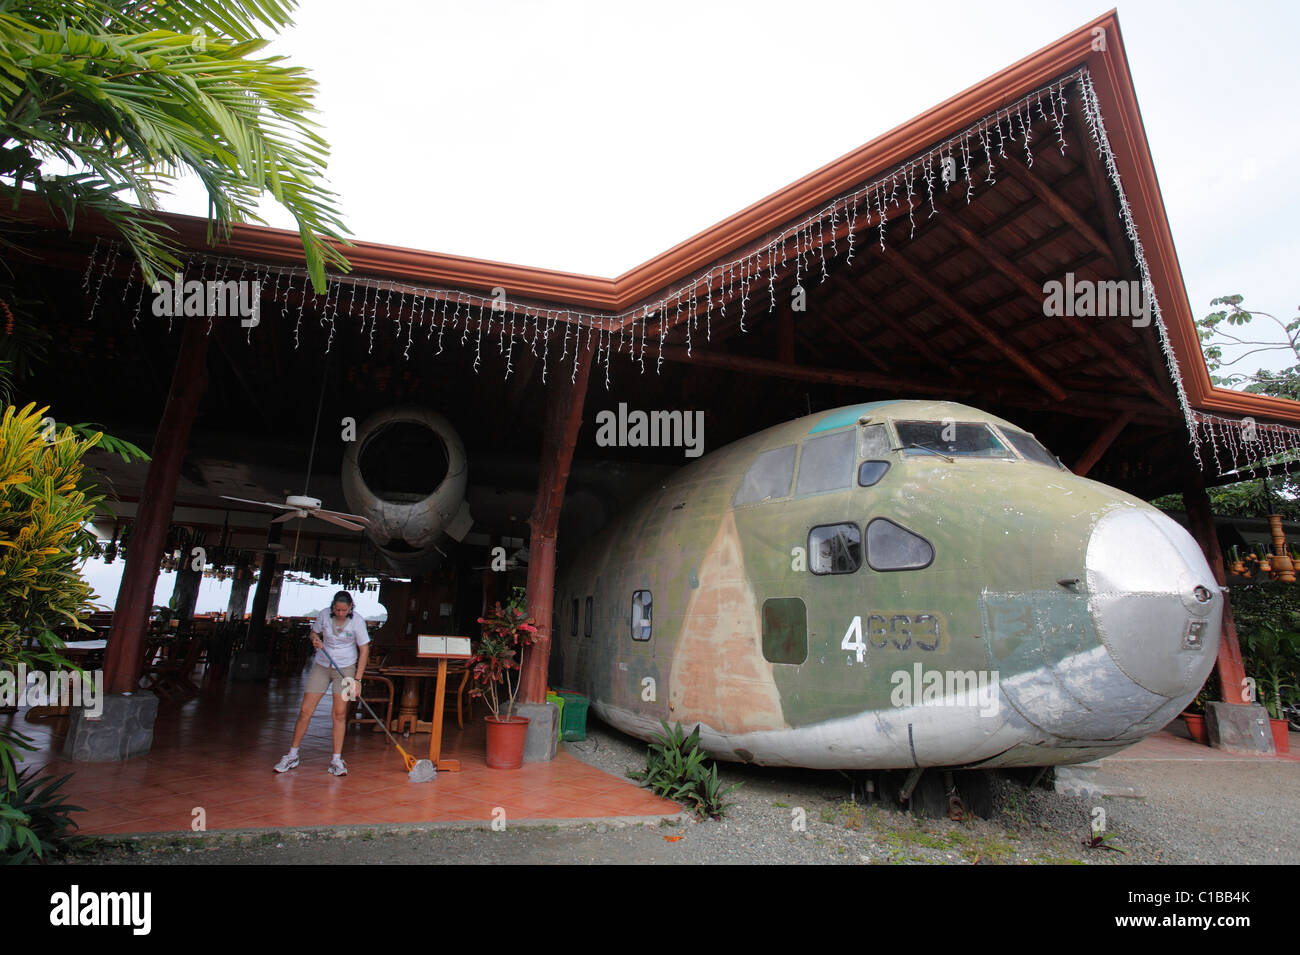 The  Fairchild C130 aircraft at the El Avion restaurant in Manuel Antonio, Costa Rica Stock Photo